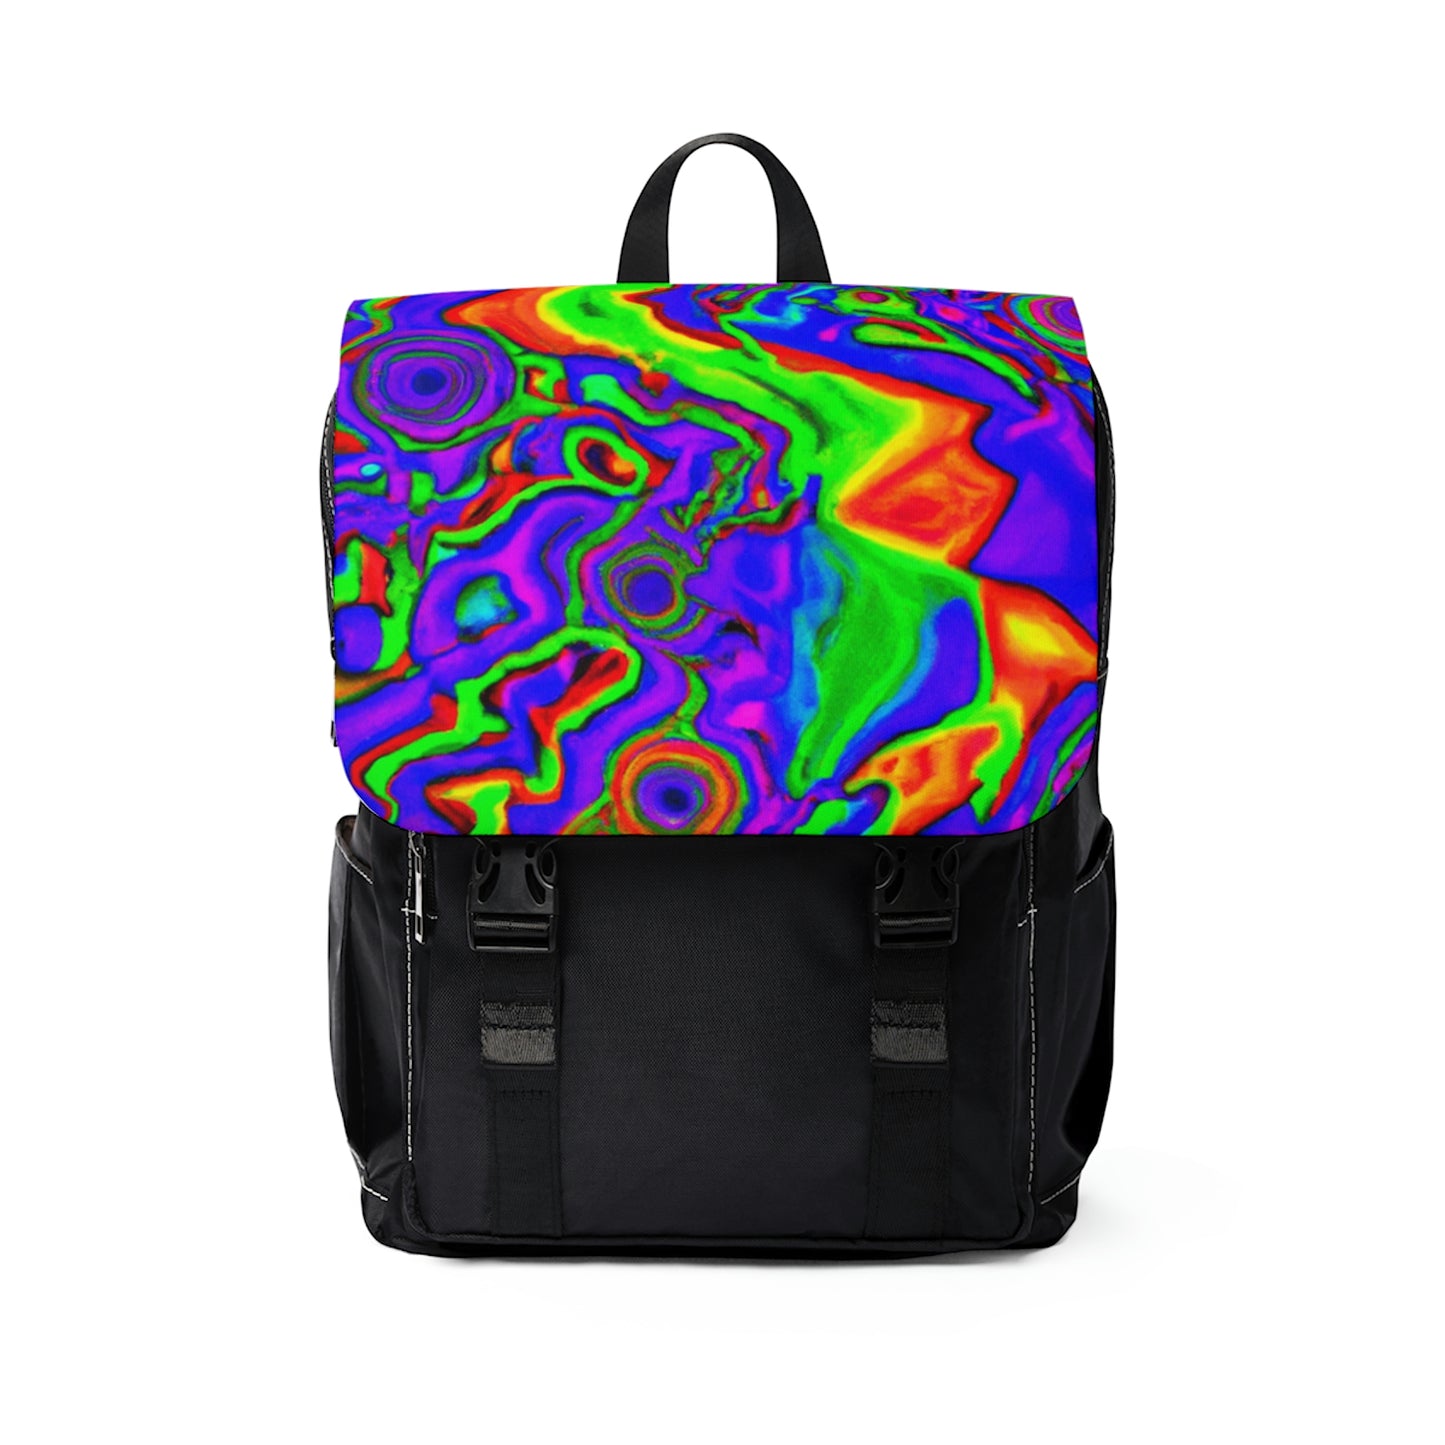 Tawnee Vie - Psychedelic Shoulder Travel Backpack Bag